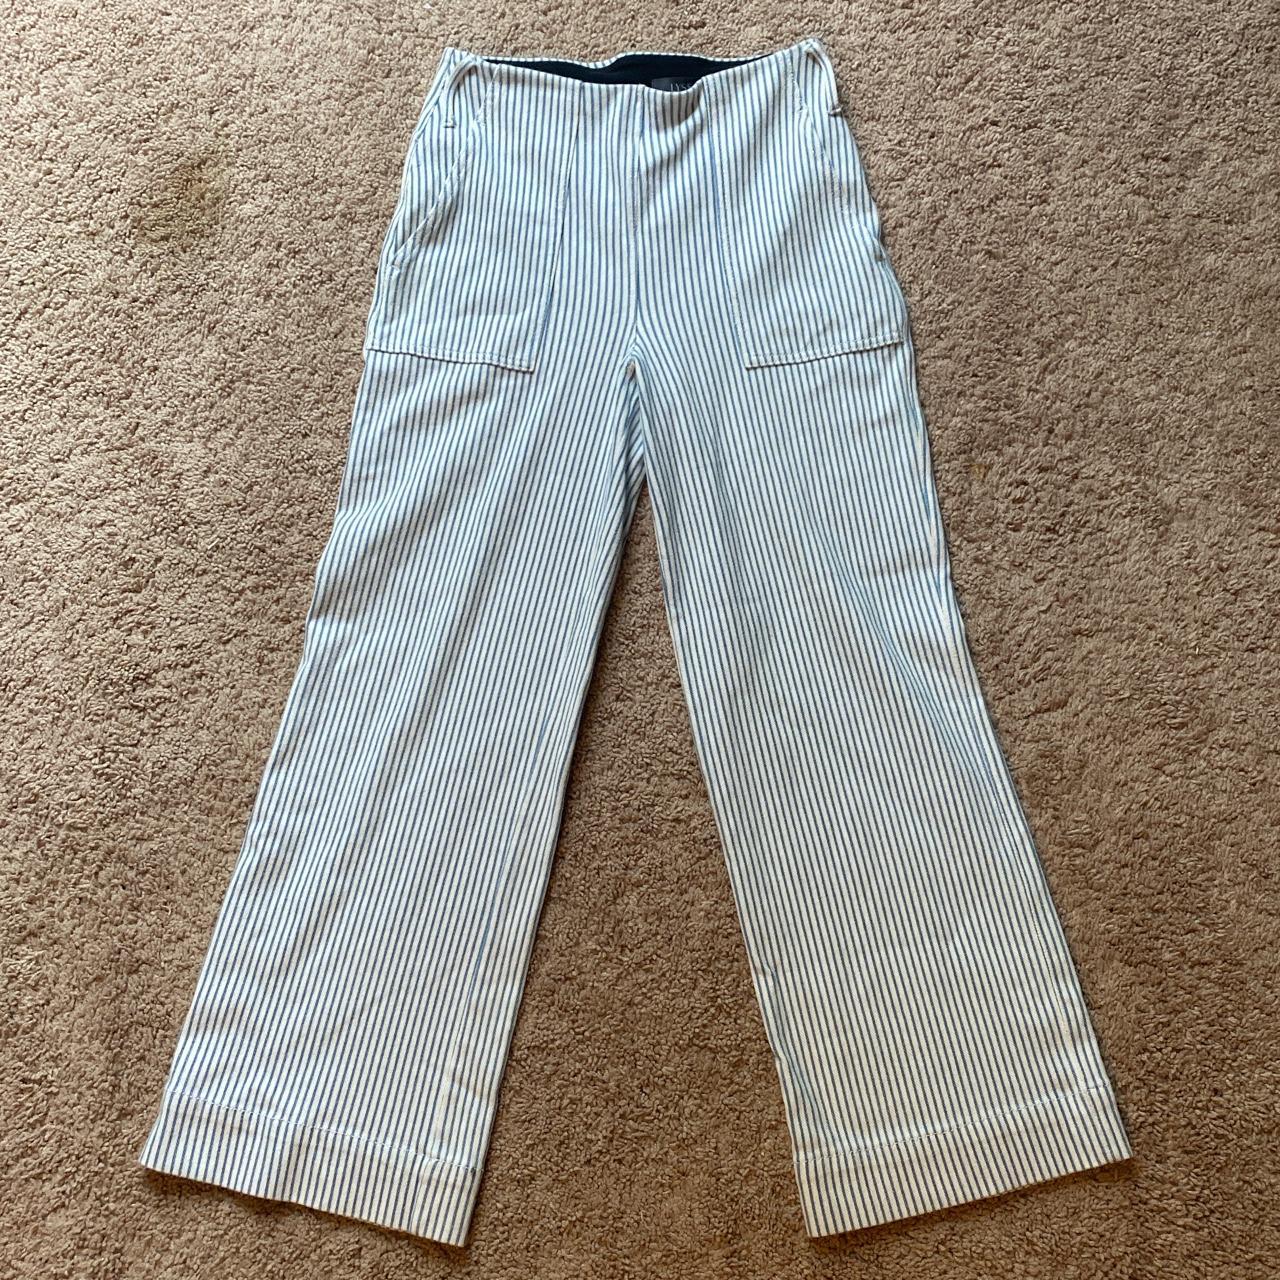 blue & white striped pants size XS stretchy waist... - Depop